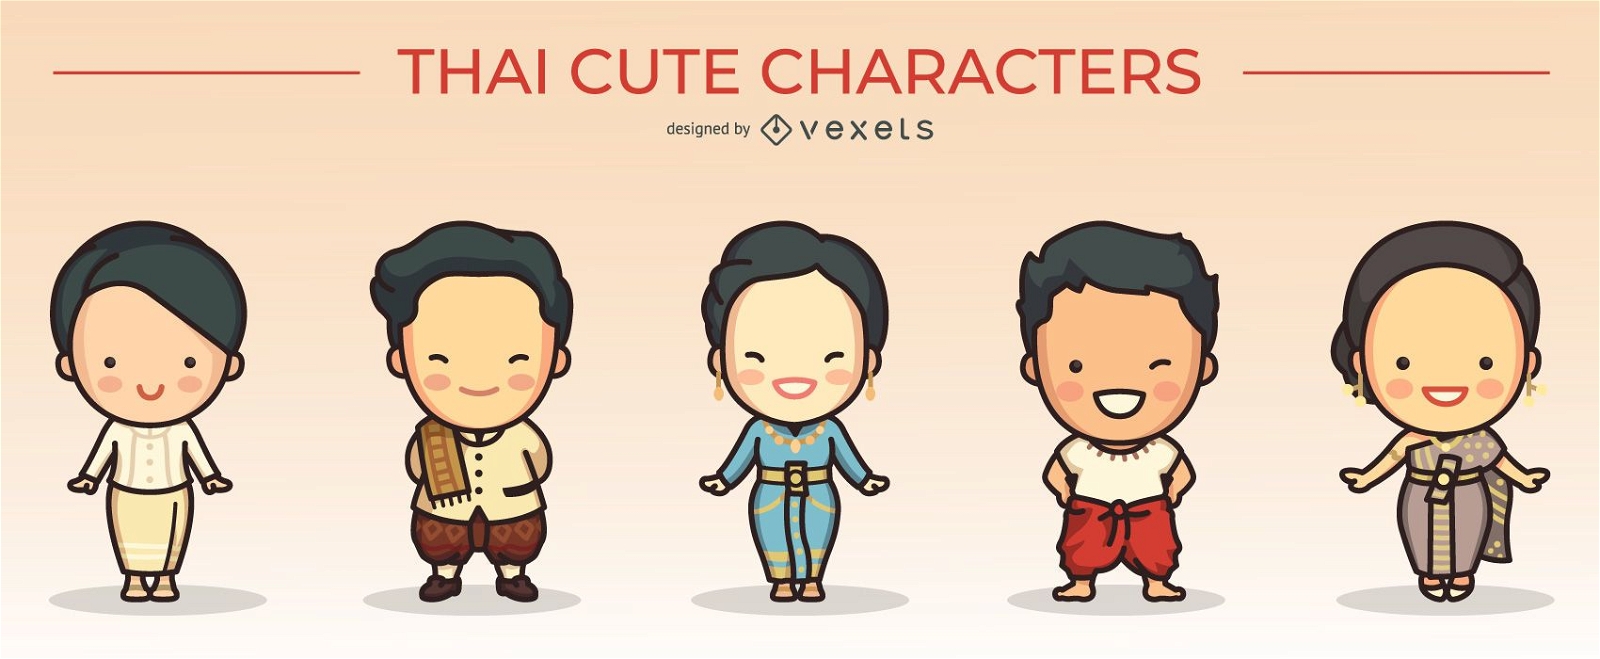 cute thai characters set